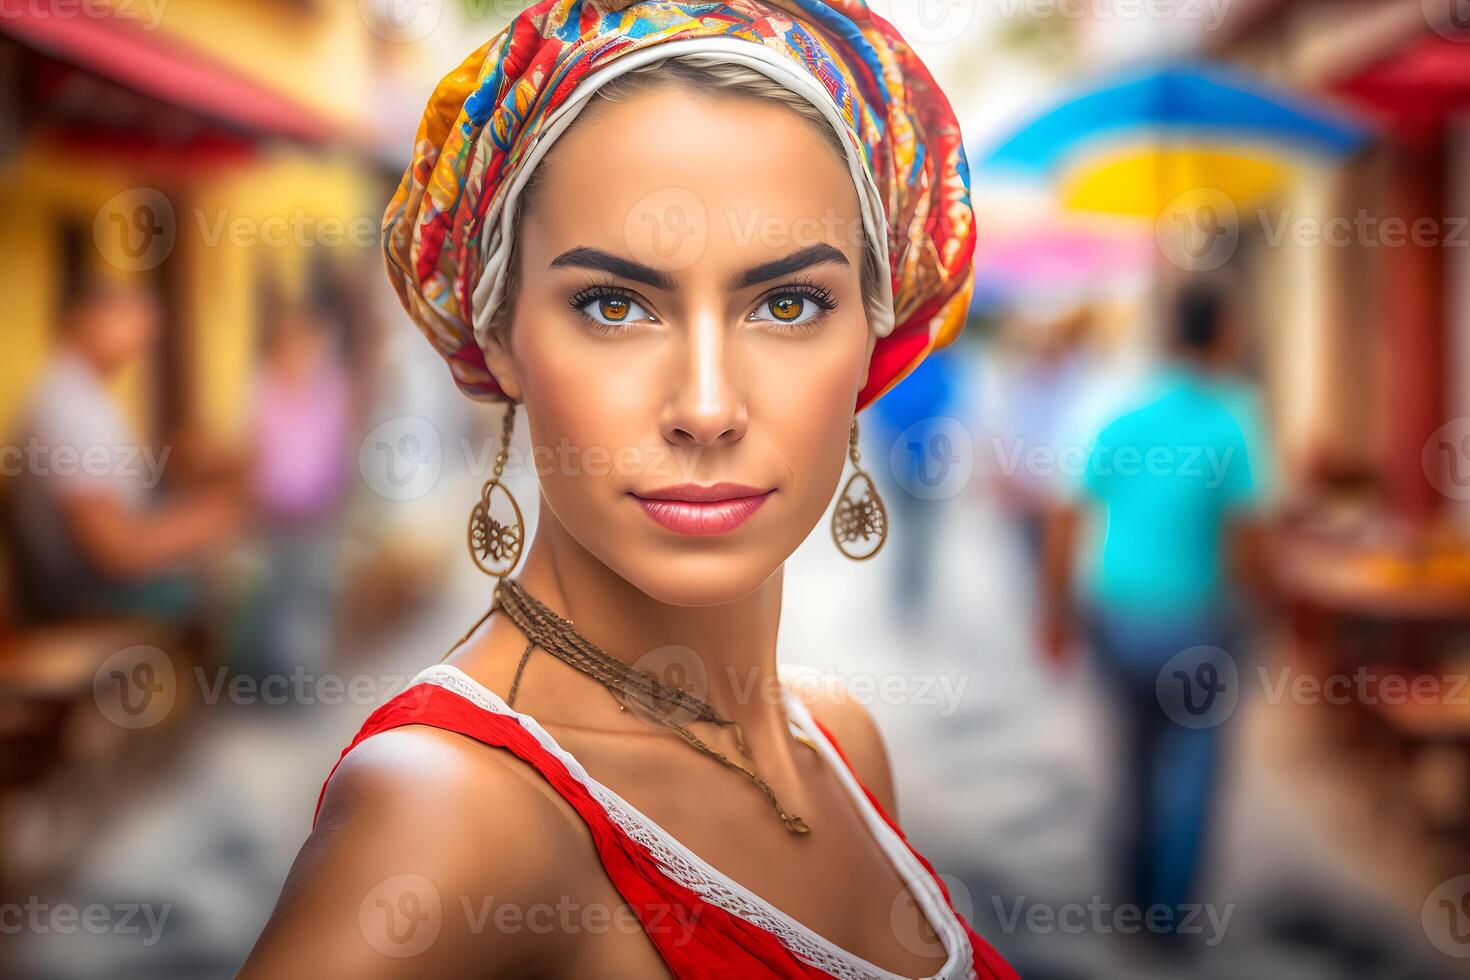 Portrait of a Hispanic woman. Neural network photo